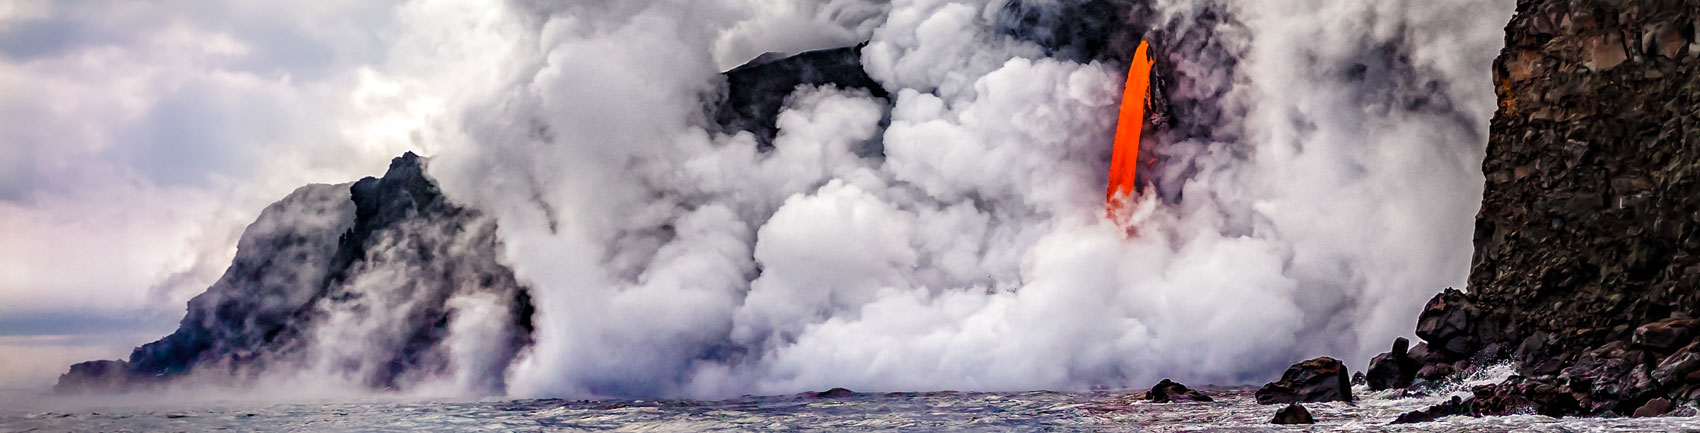 Hawaii Volcanos National Park lava flow